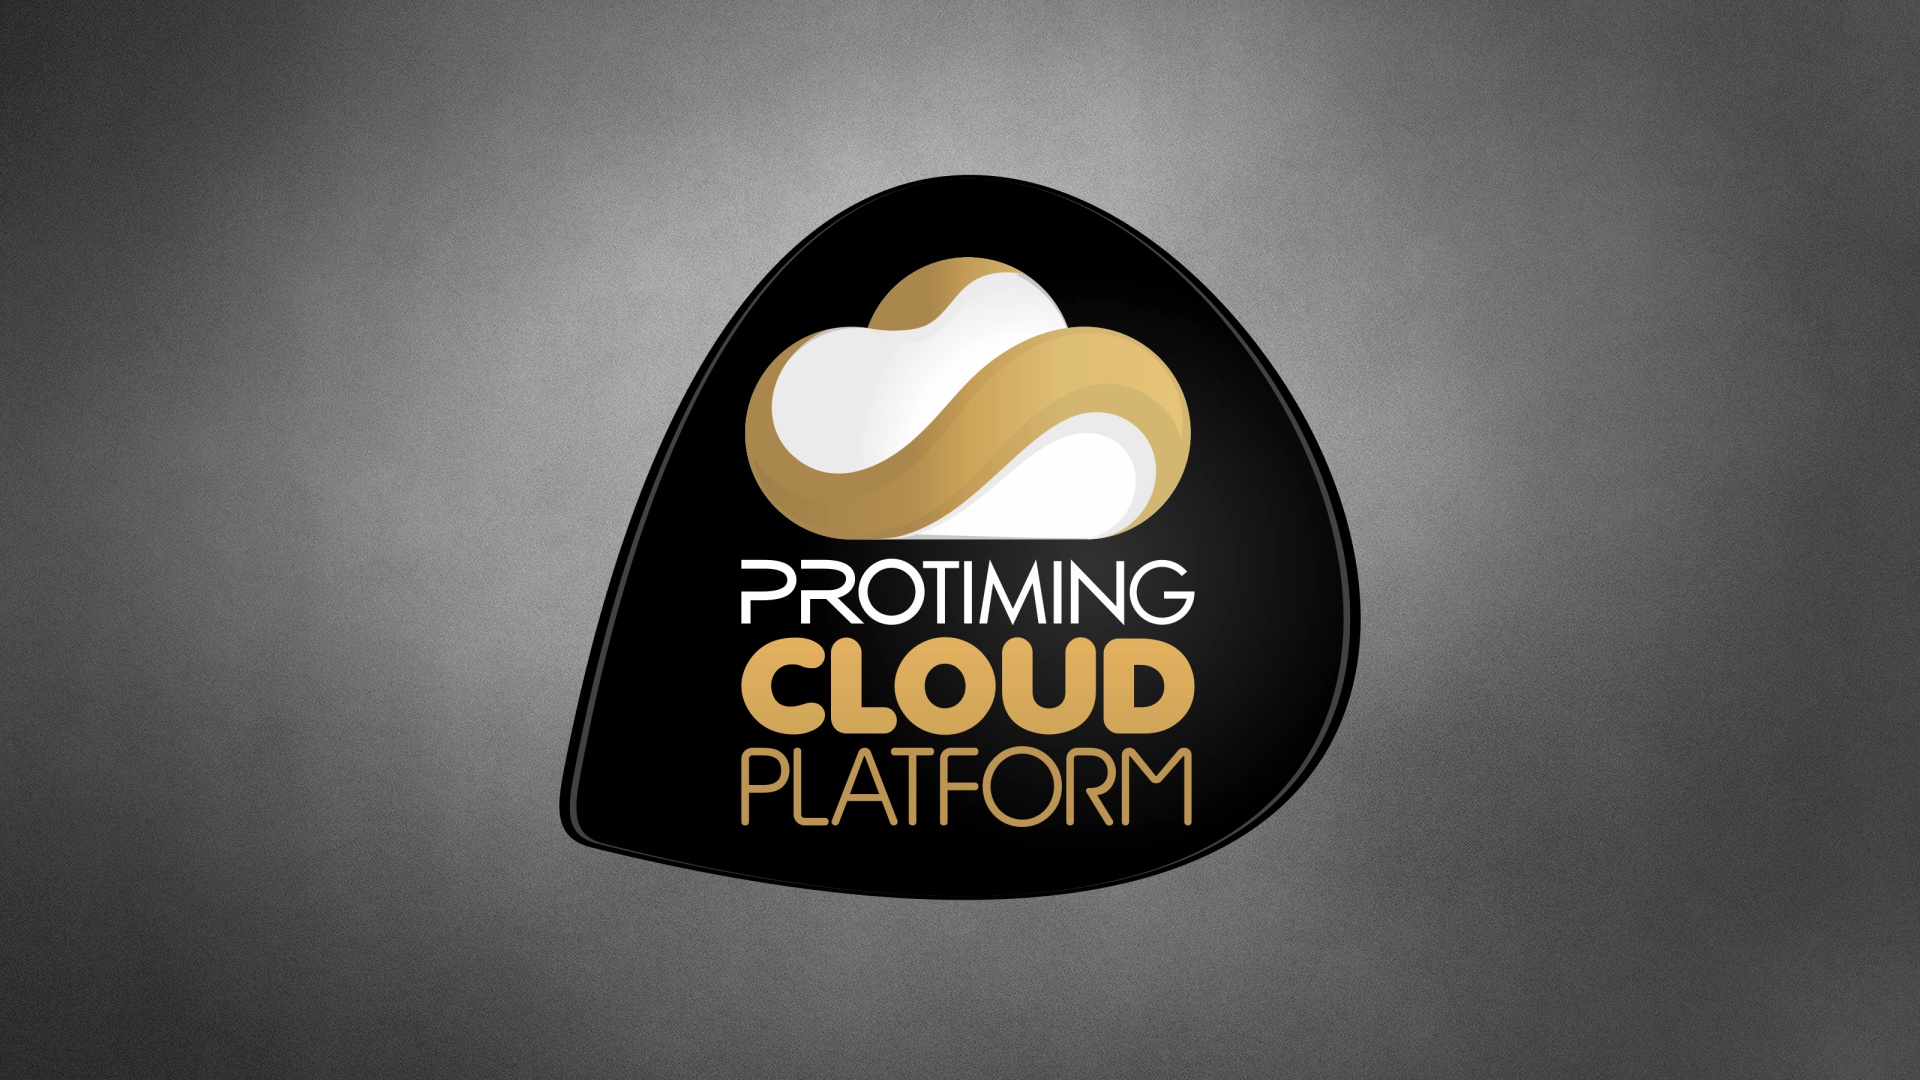 Protiming Cloud Platform